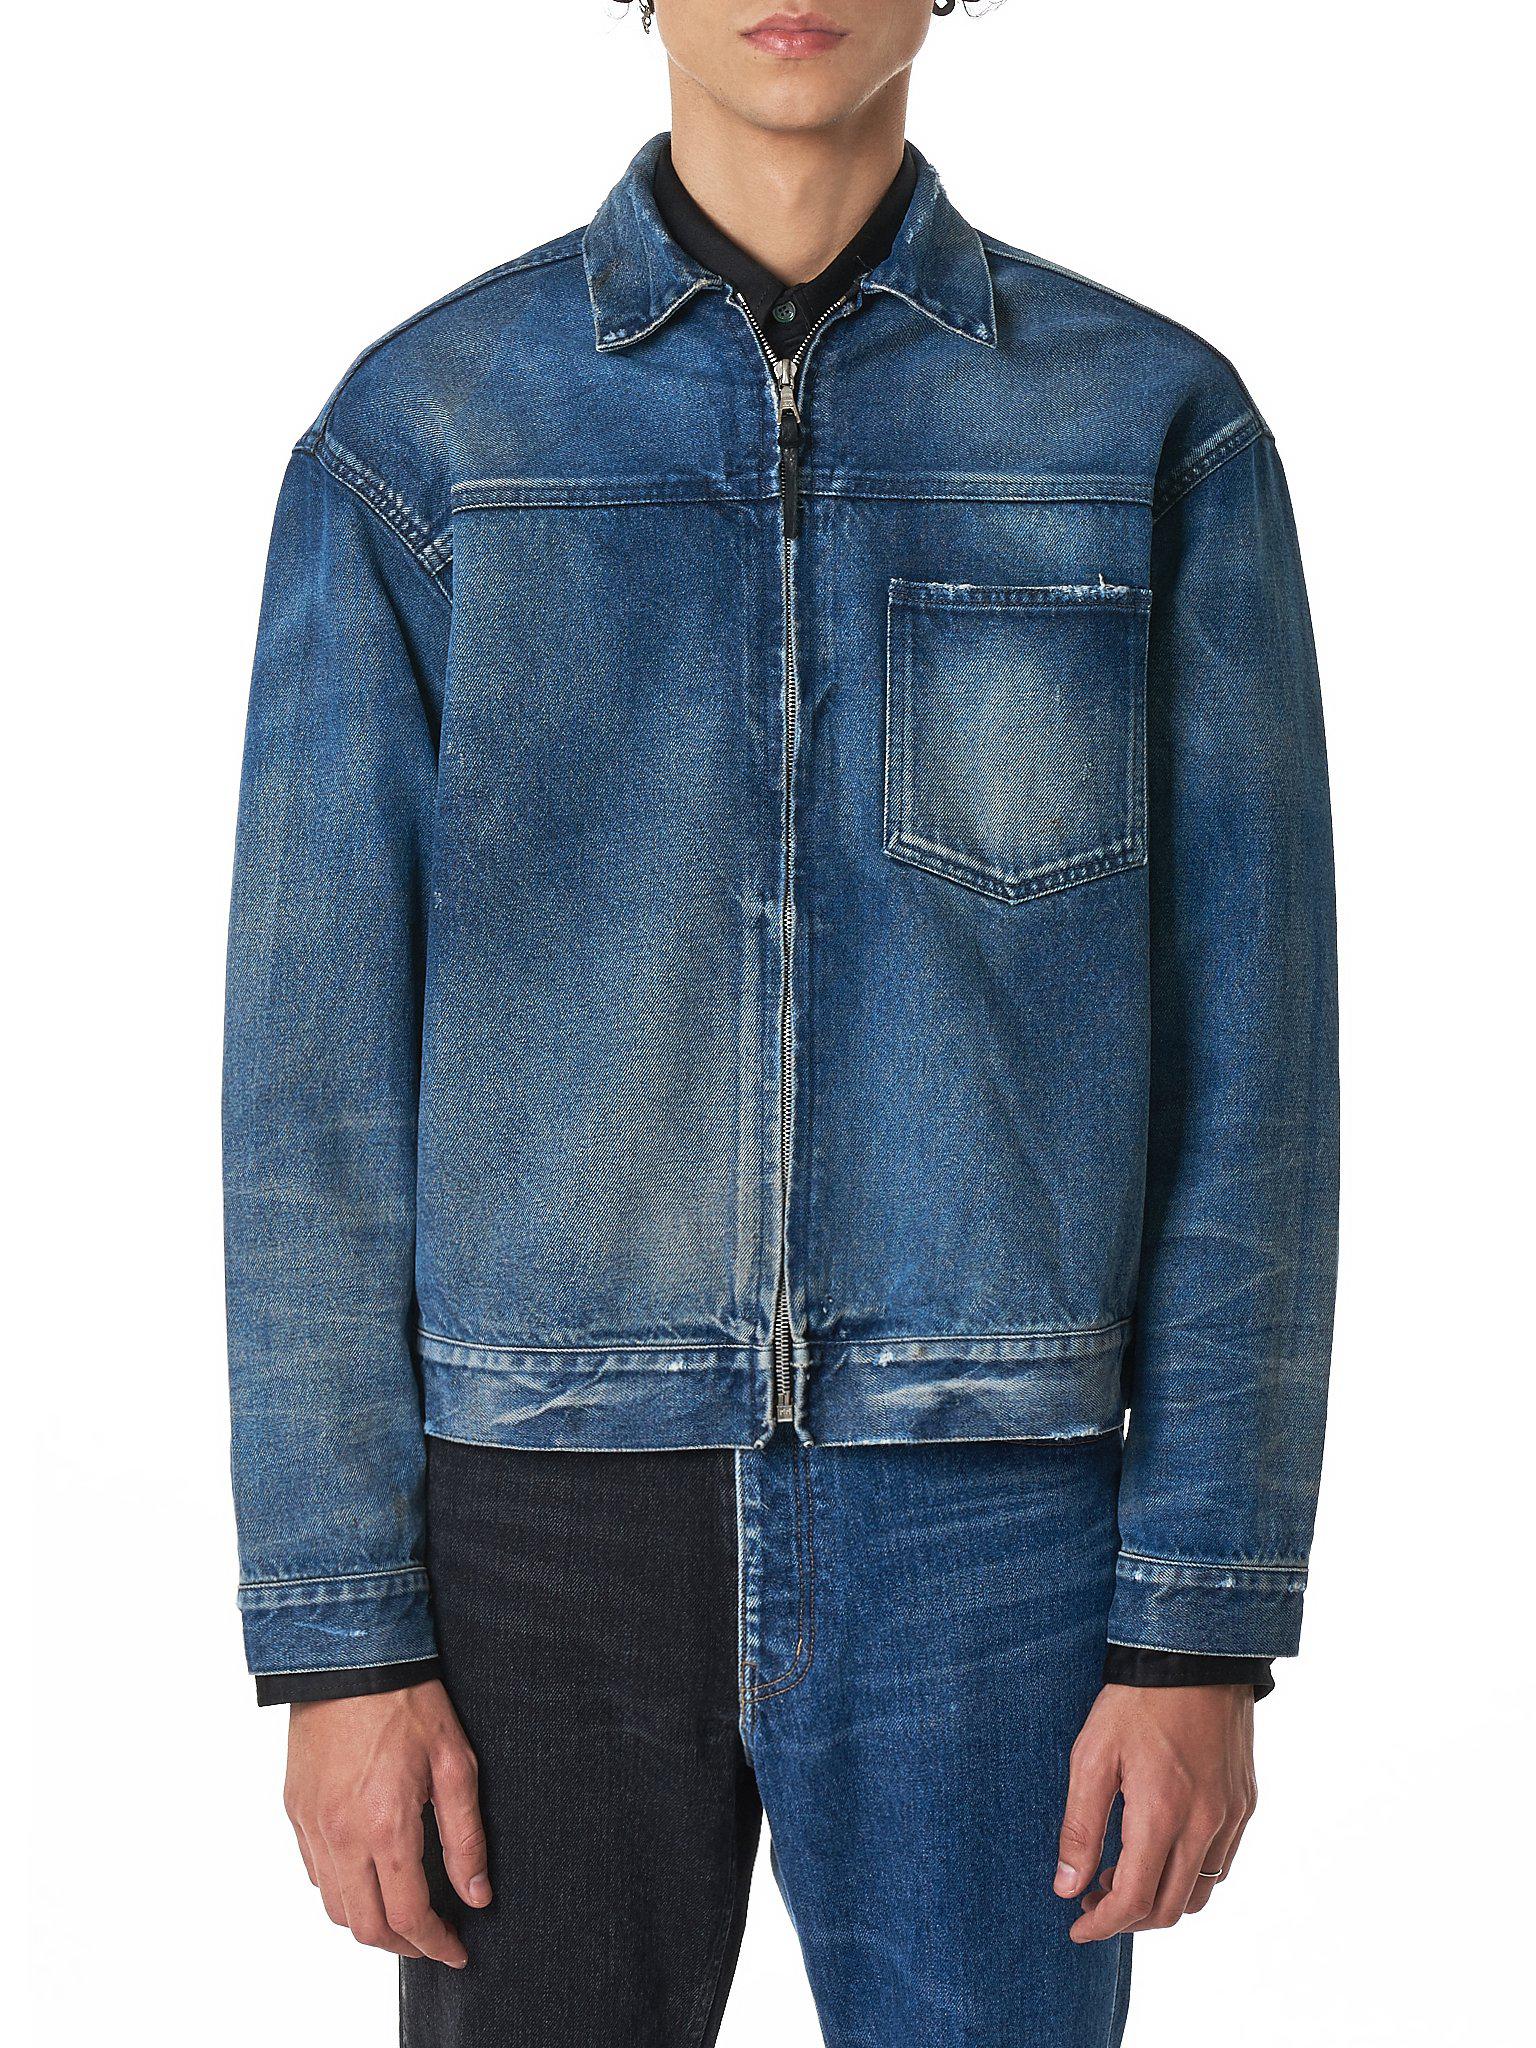 John Elliott Distressed Zip Denim Jacket in Indigo (Blue) for Men - Lyst